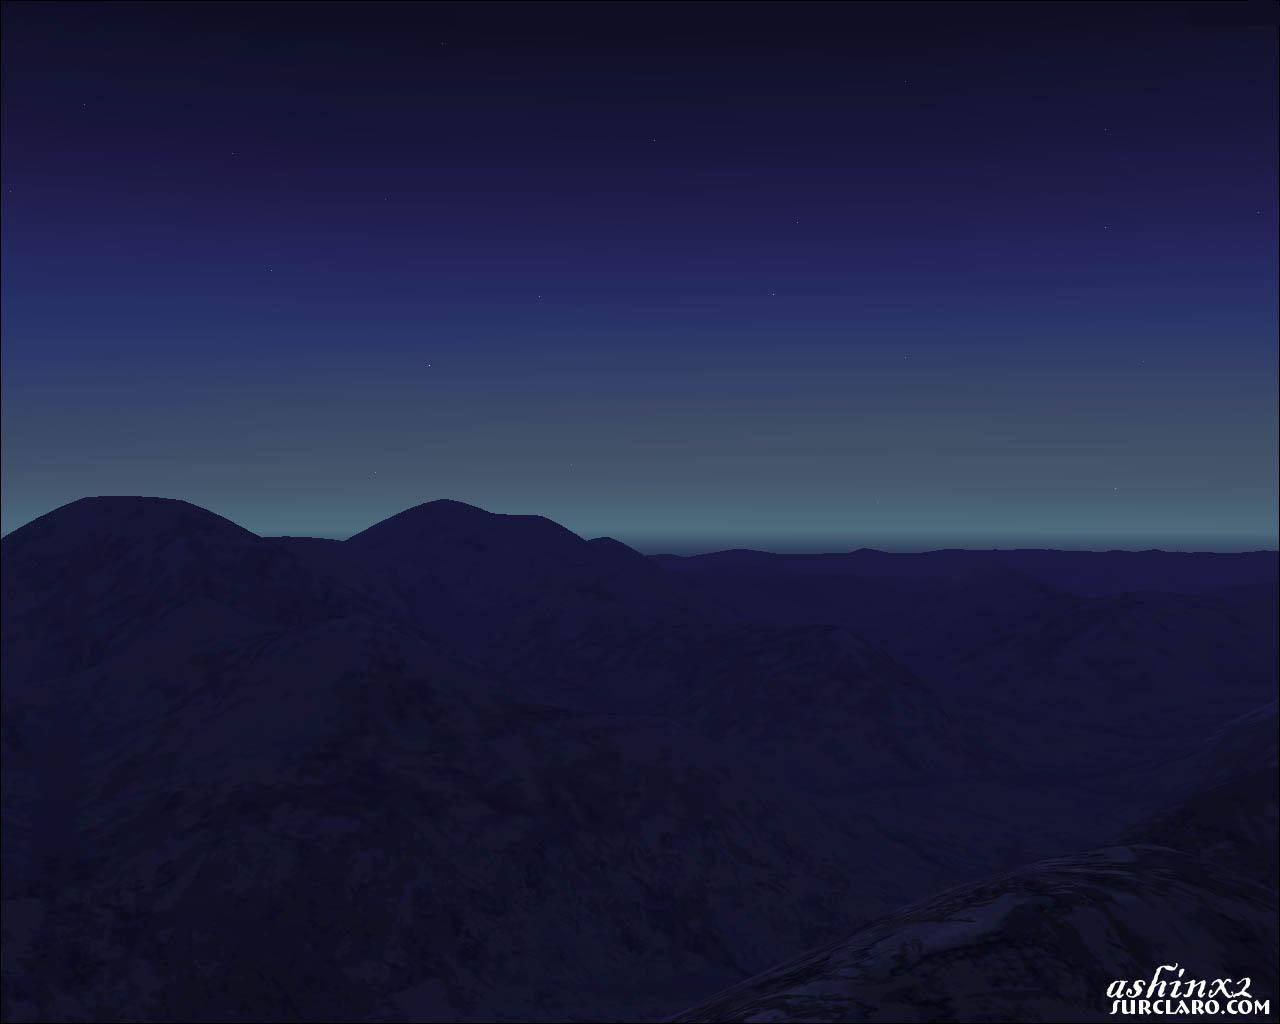 Afganistan Mountain range at Dusk.

18:20  - Photo 16052